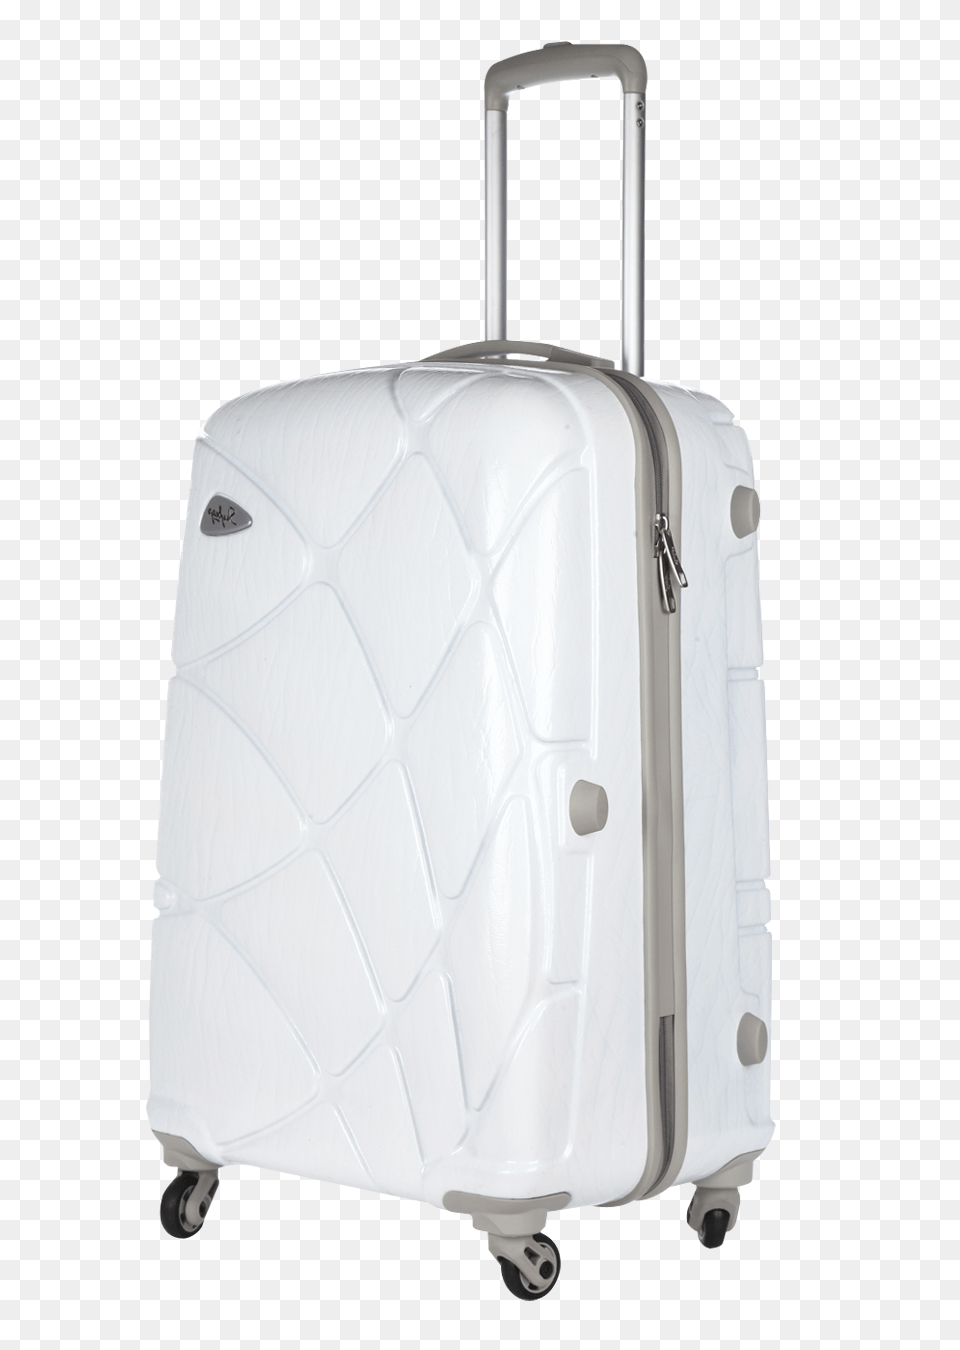 Pngpix Com Strolley Bag Transparent Image, Baggage, Suitcase, Crib, Furniture Free Png Download